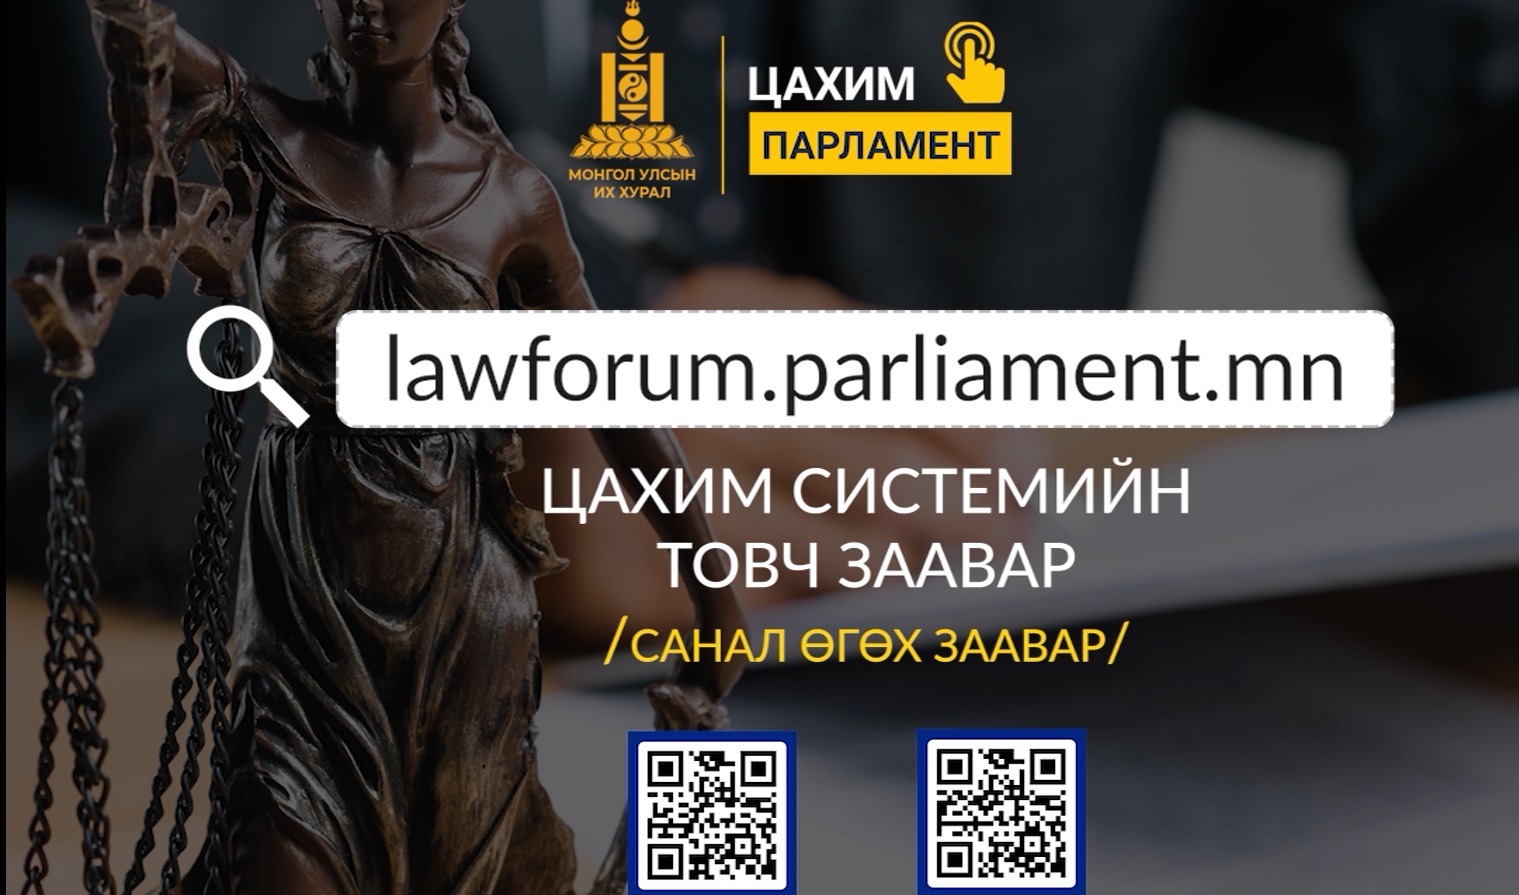 Lawforum.parliament.mn цахим системд санал өгөх заавар